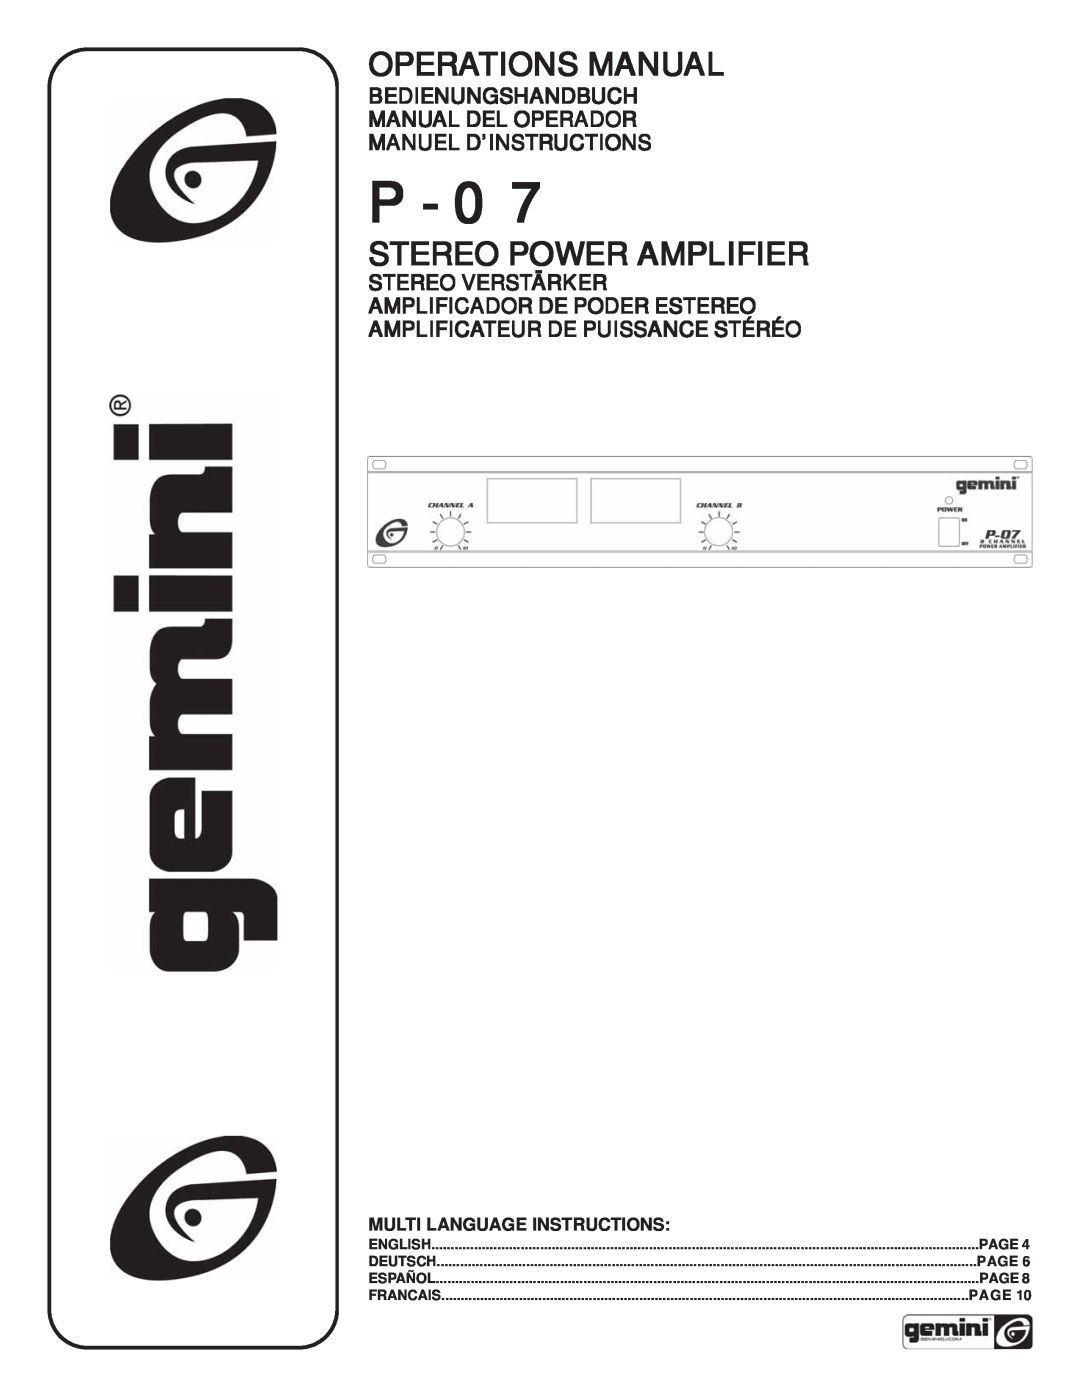 Gemini P-07 manual Operations Manual, Stereo Power Amplifier, Bedienungshandbuch Manual Del Operador, Francais 